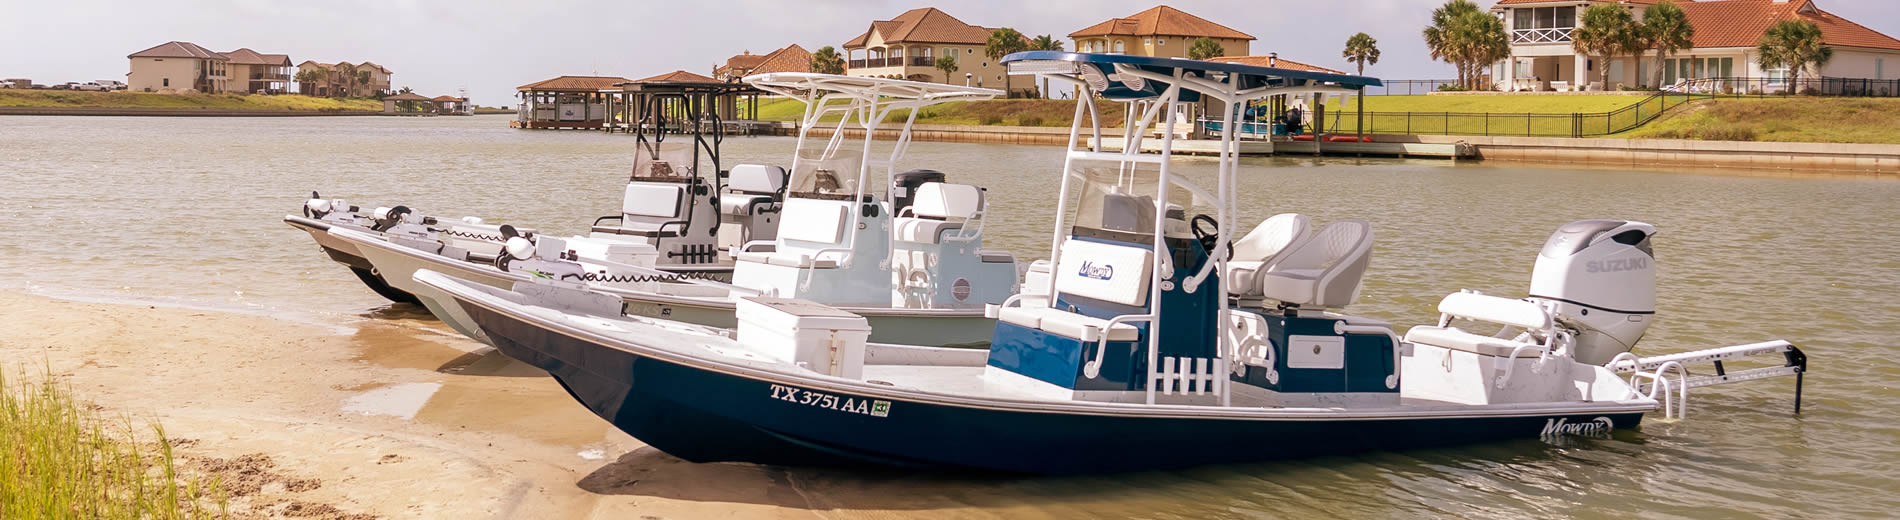 Mowdy Shallow water Texas Fishing Boats